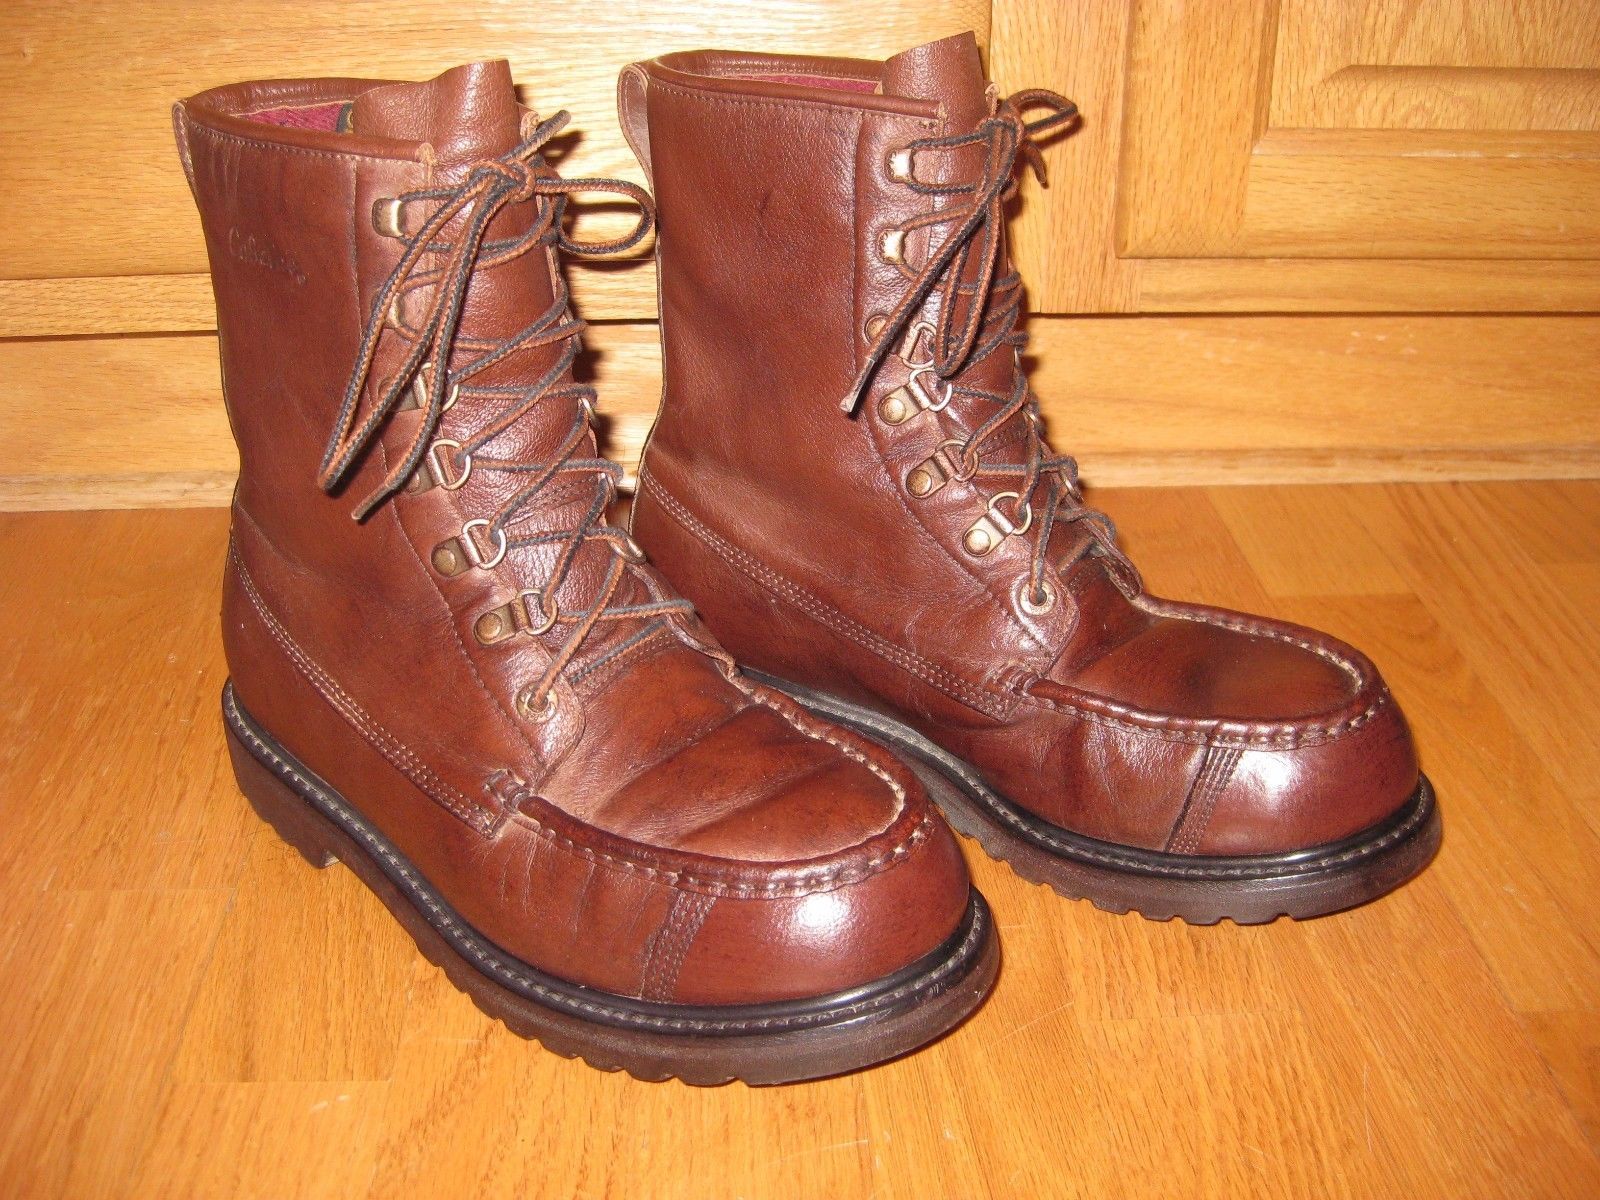 cabela's men's work boots